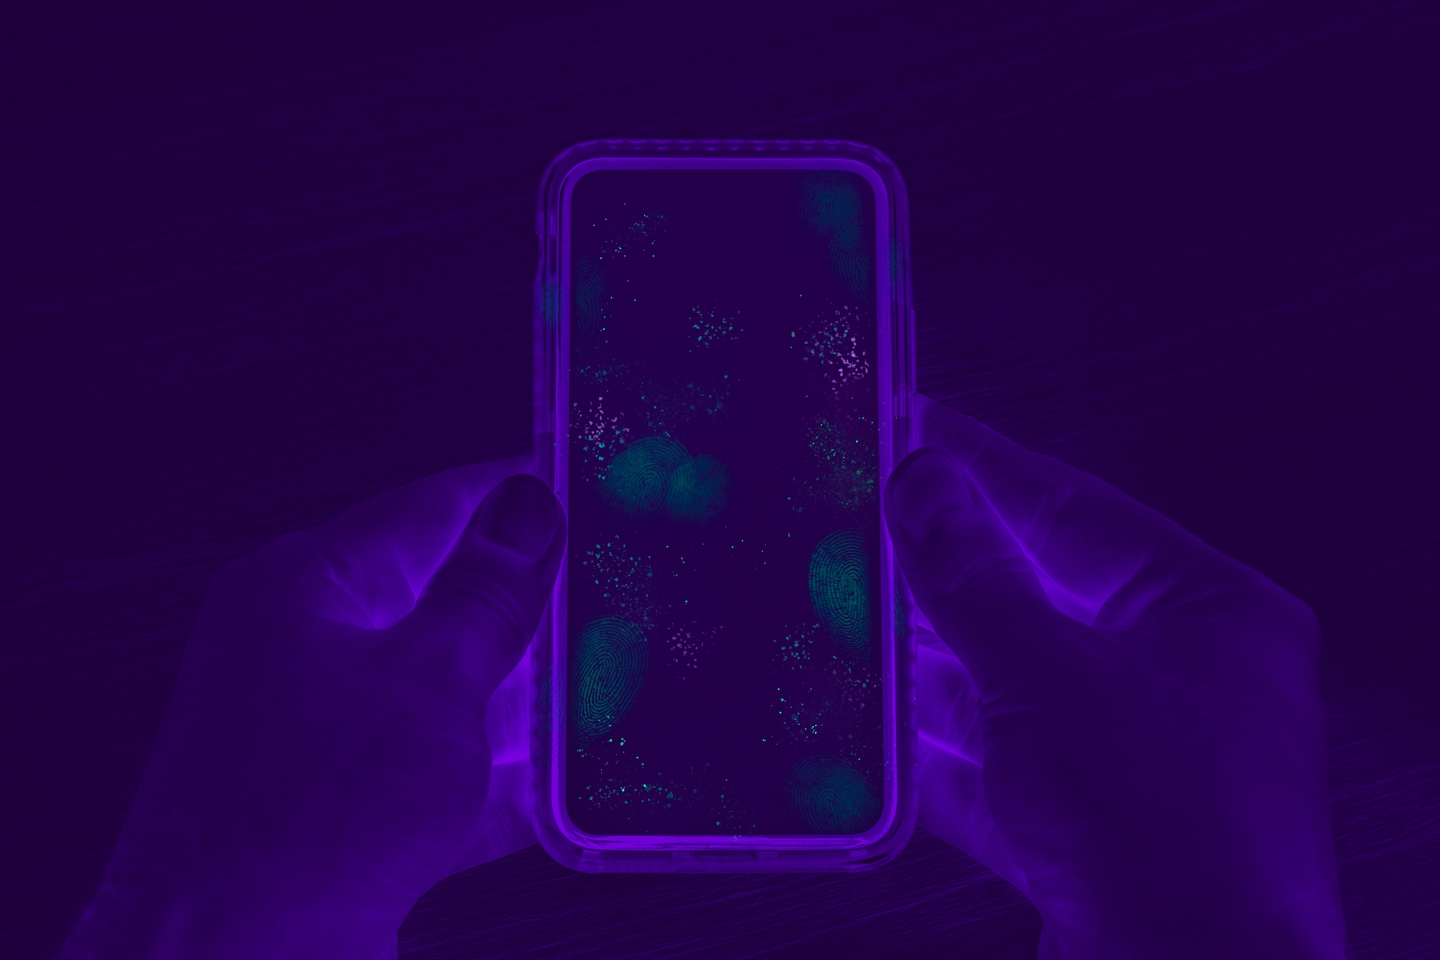 Photo of phone in the dark with purple lighting around it